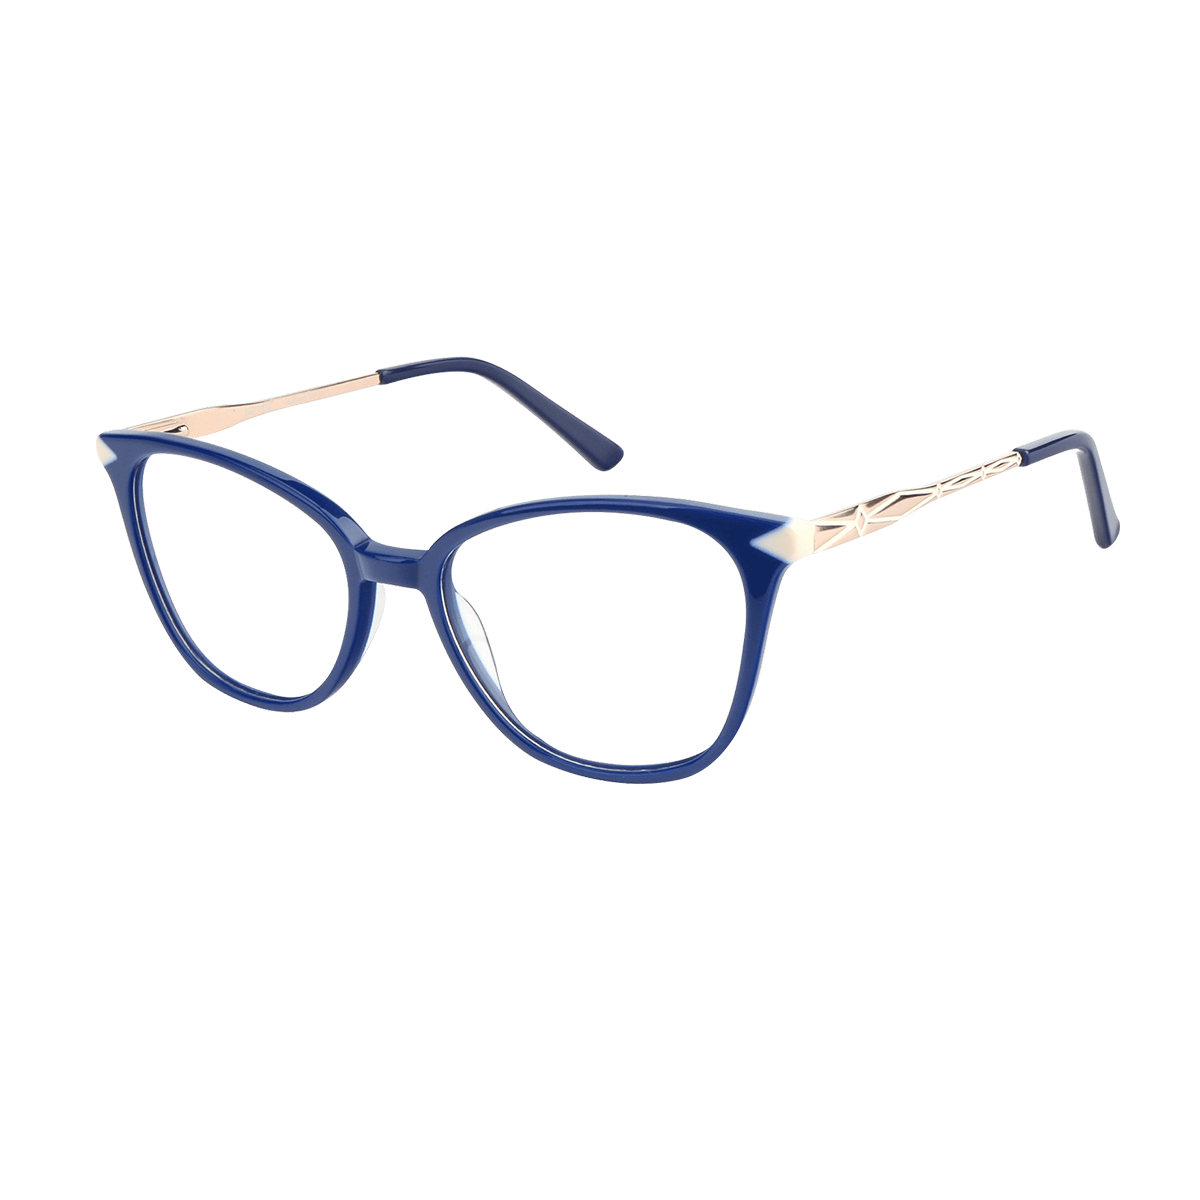 Asteria - Square Blue Reading Glasses for Women